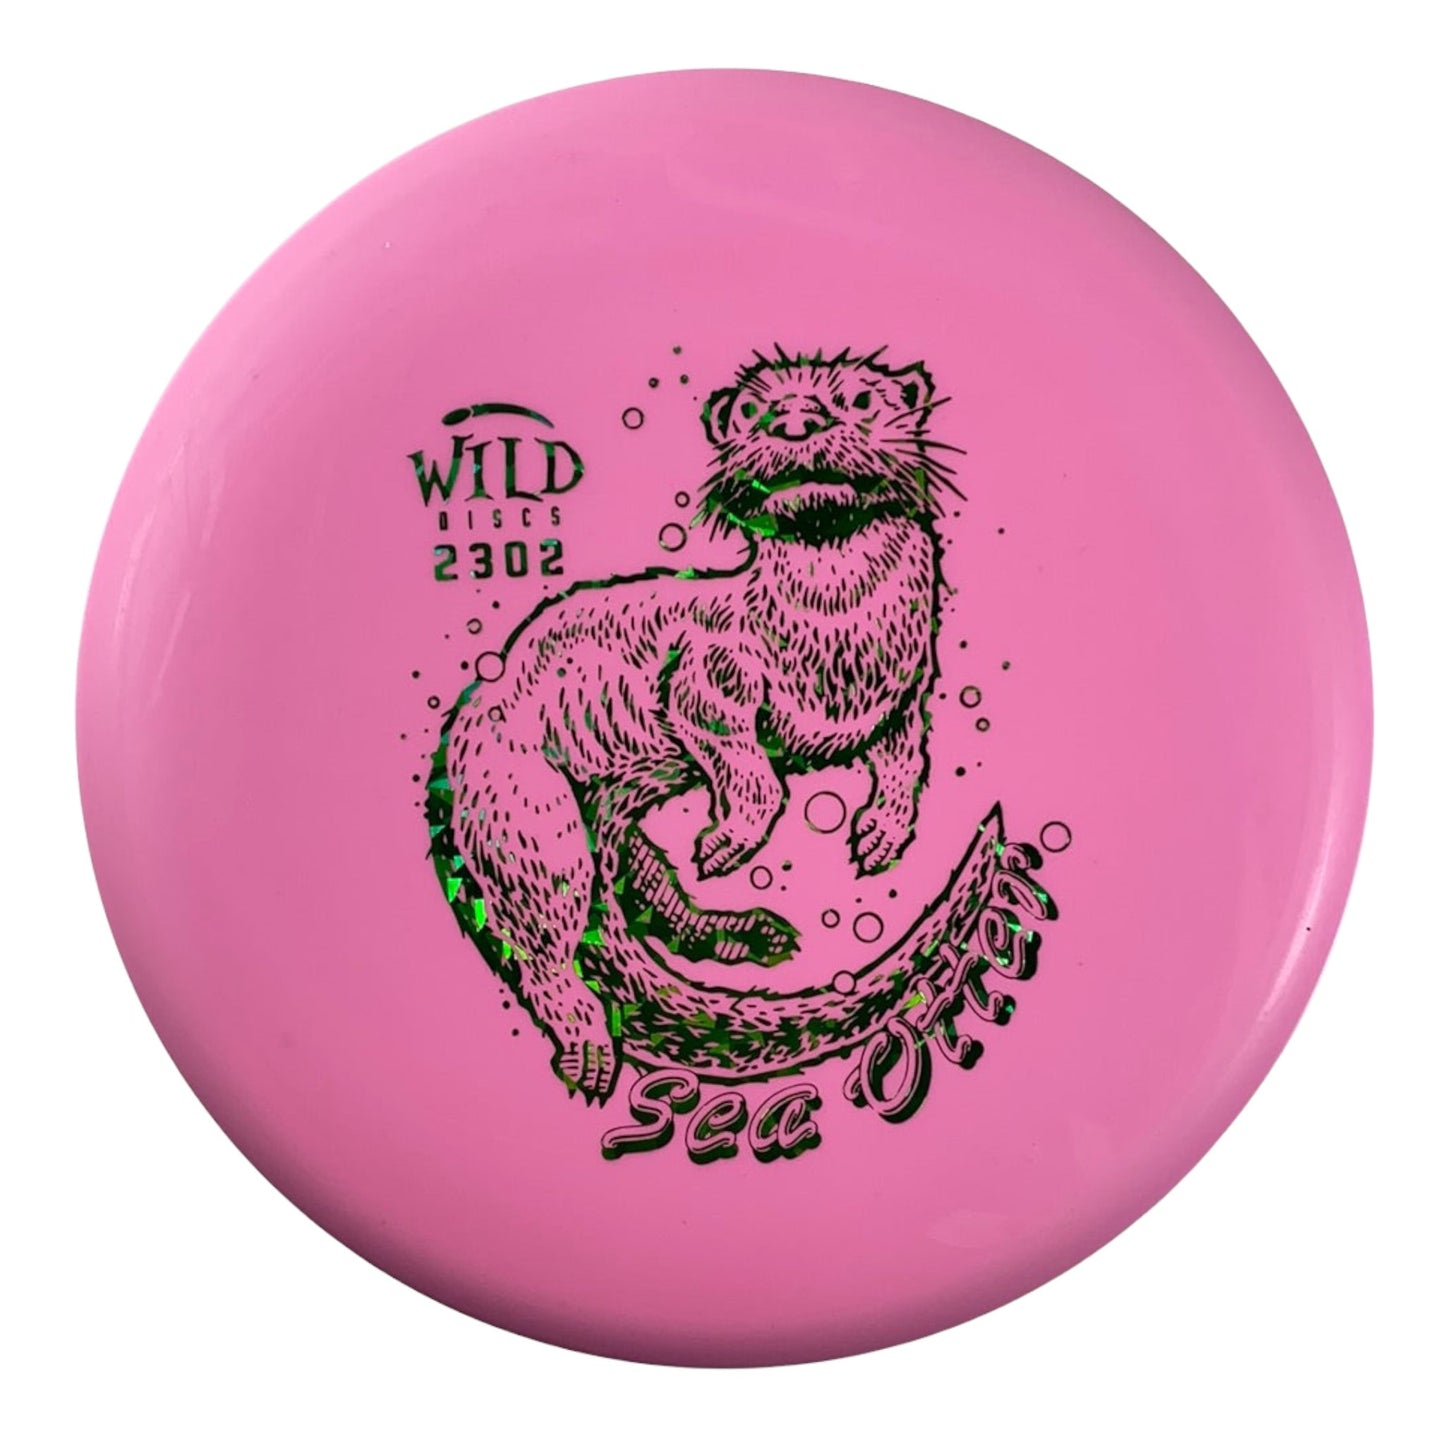 Wild Discs Sea Otter | Landslide | Pink/Green 173g Disc Golf